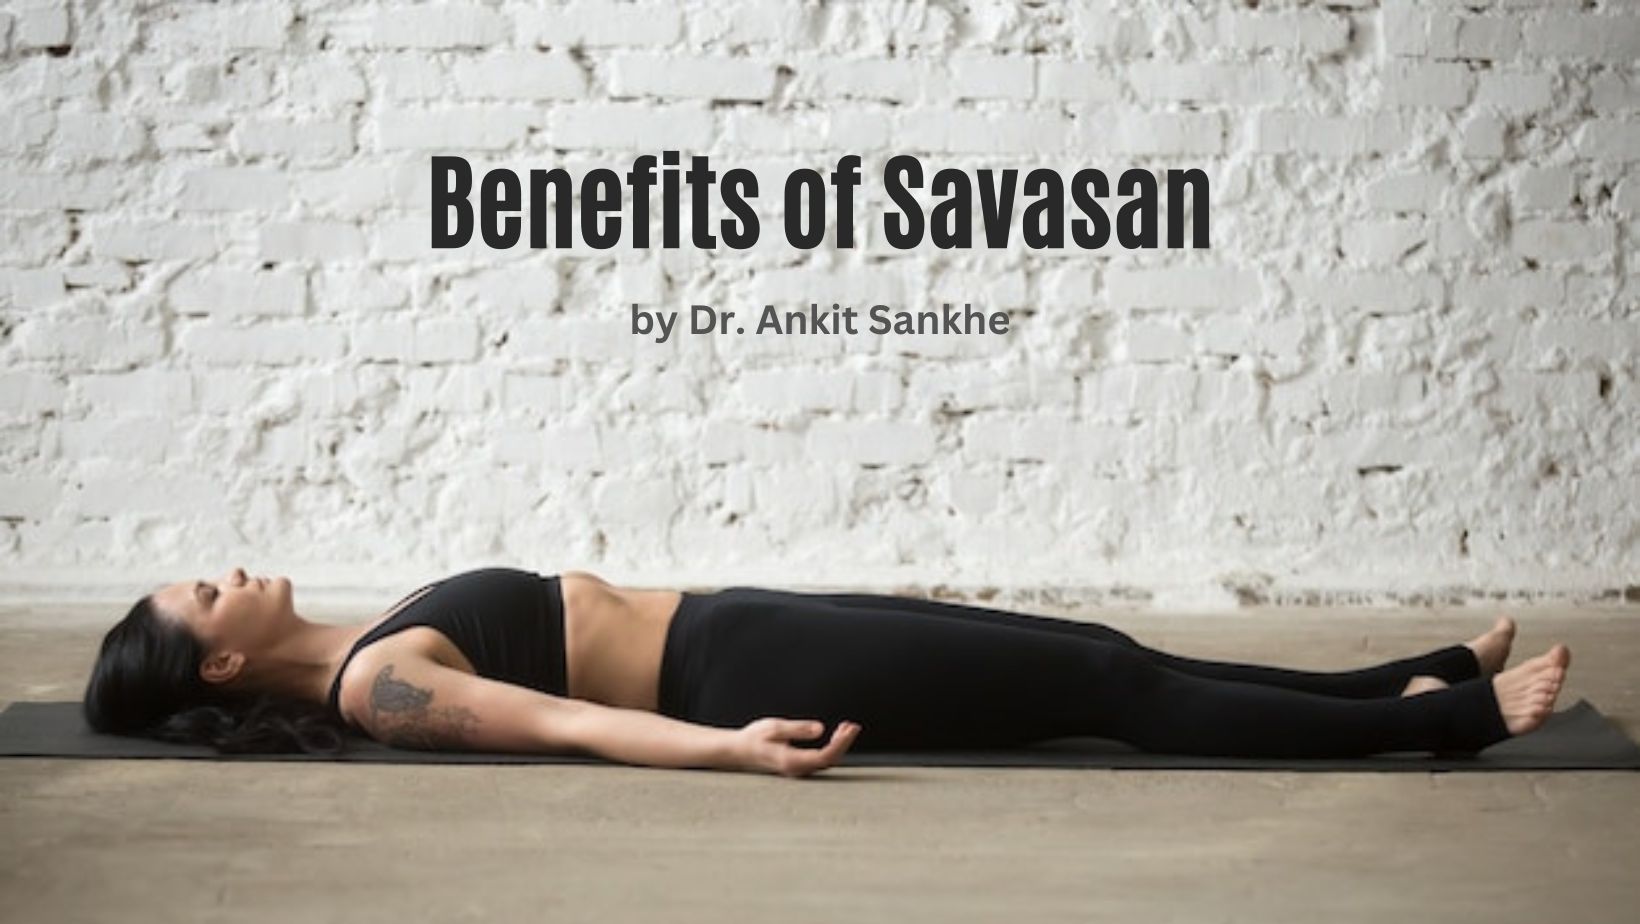 Calm of Asian woman practice yoga Dead Body or Savasana pose with  meditation, Lifestyle Stock Footage ft. asana & balance - Envato Elements